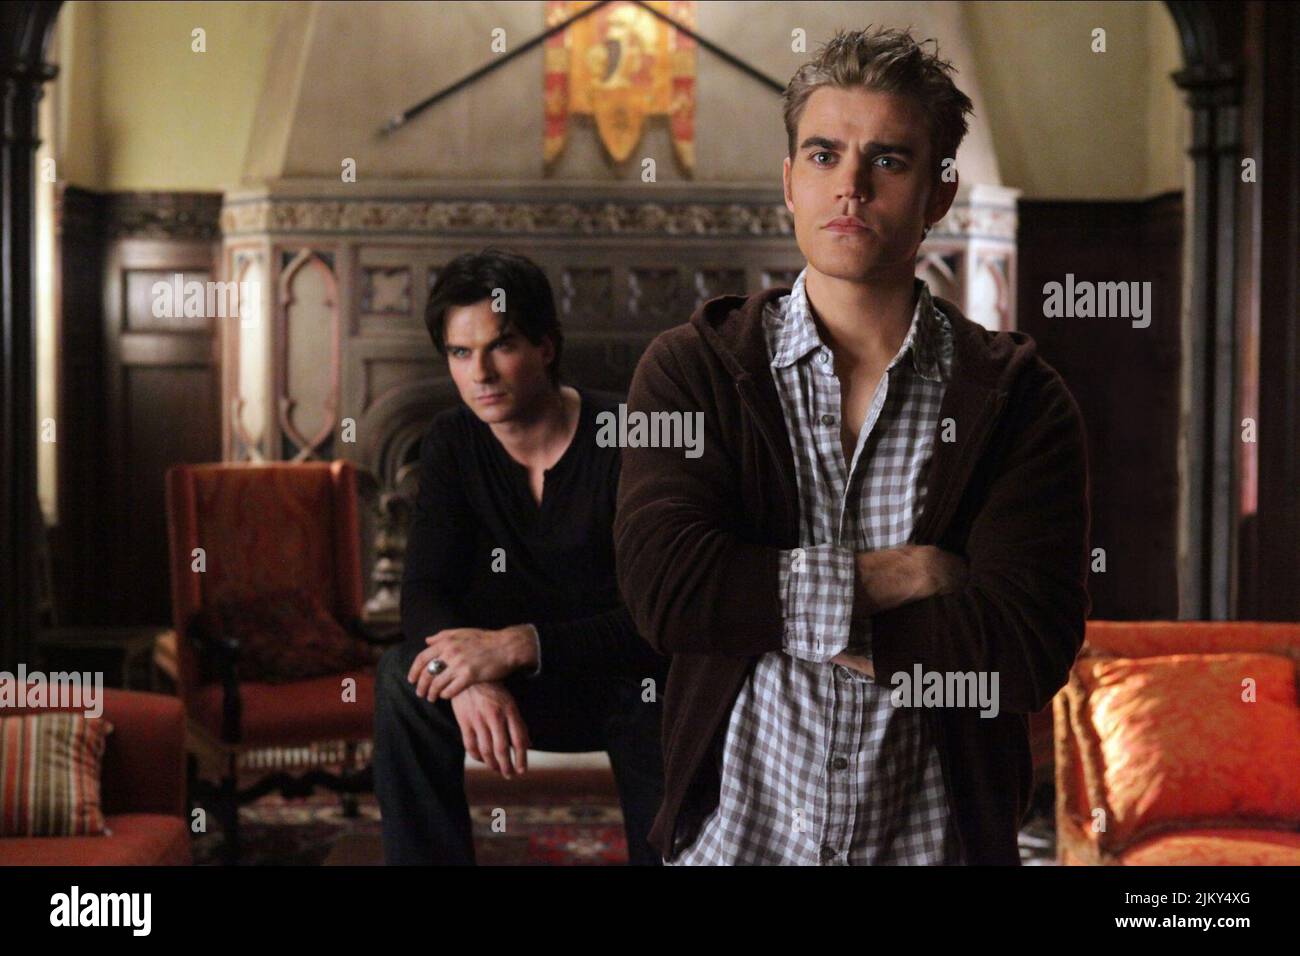 IAN Somerhalder, Paul Wesley, The Vampire Diaries: Saison 2, 2010 Stockfoto